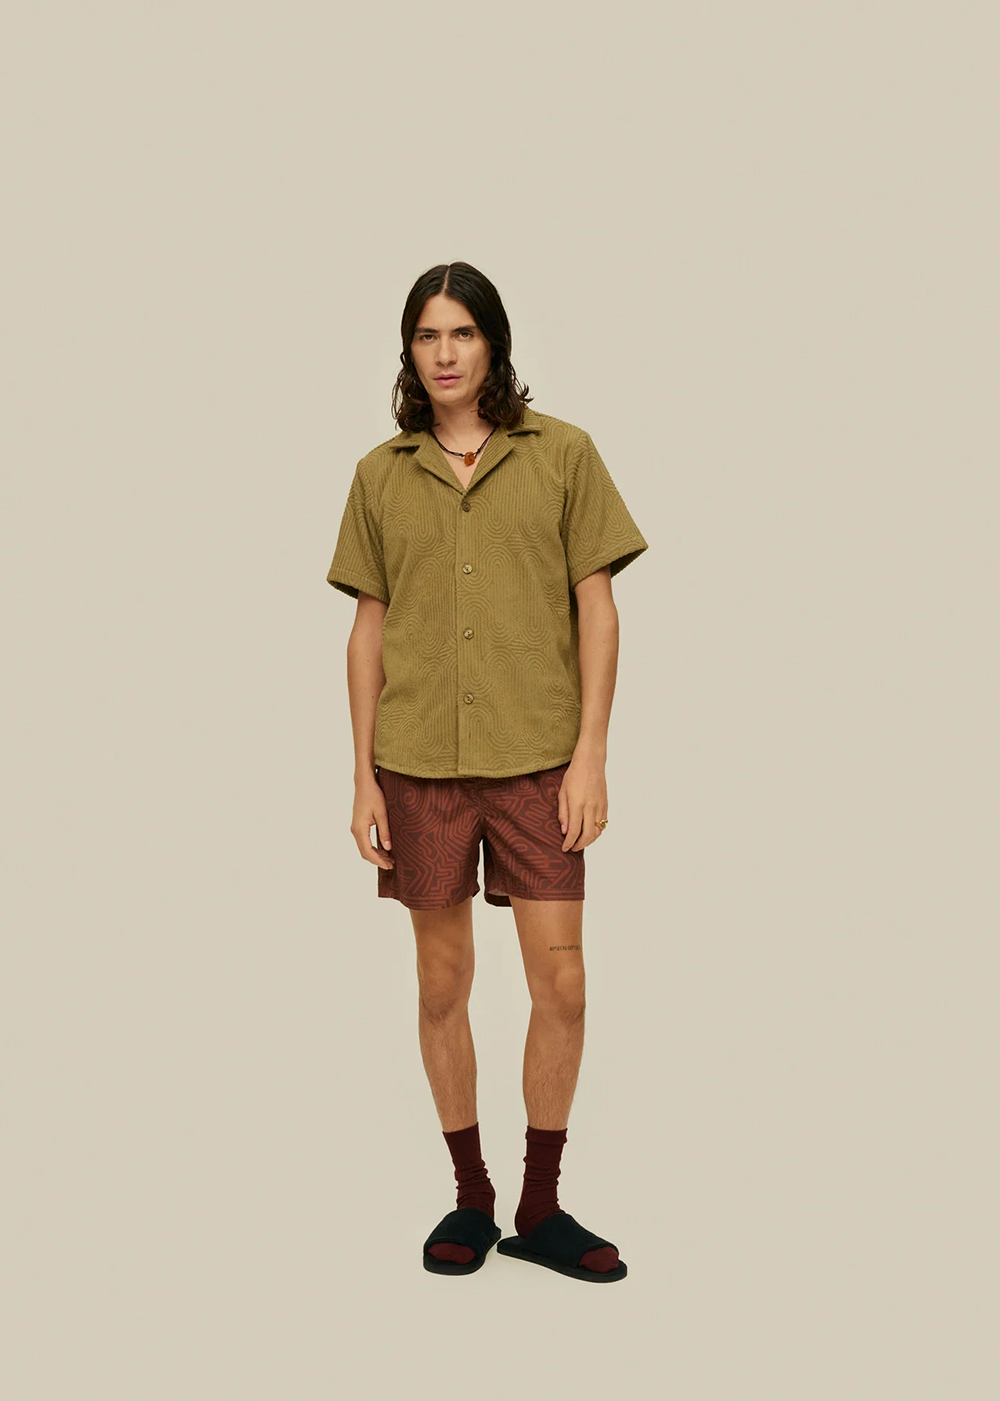 Zabyrinth Cuba Terry Shirt - OAS Company - Danali